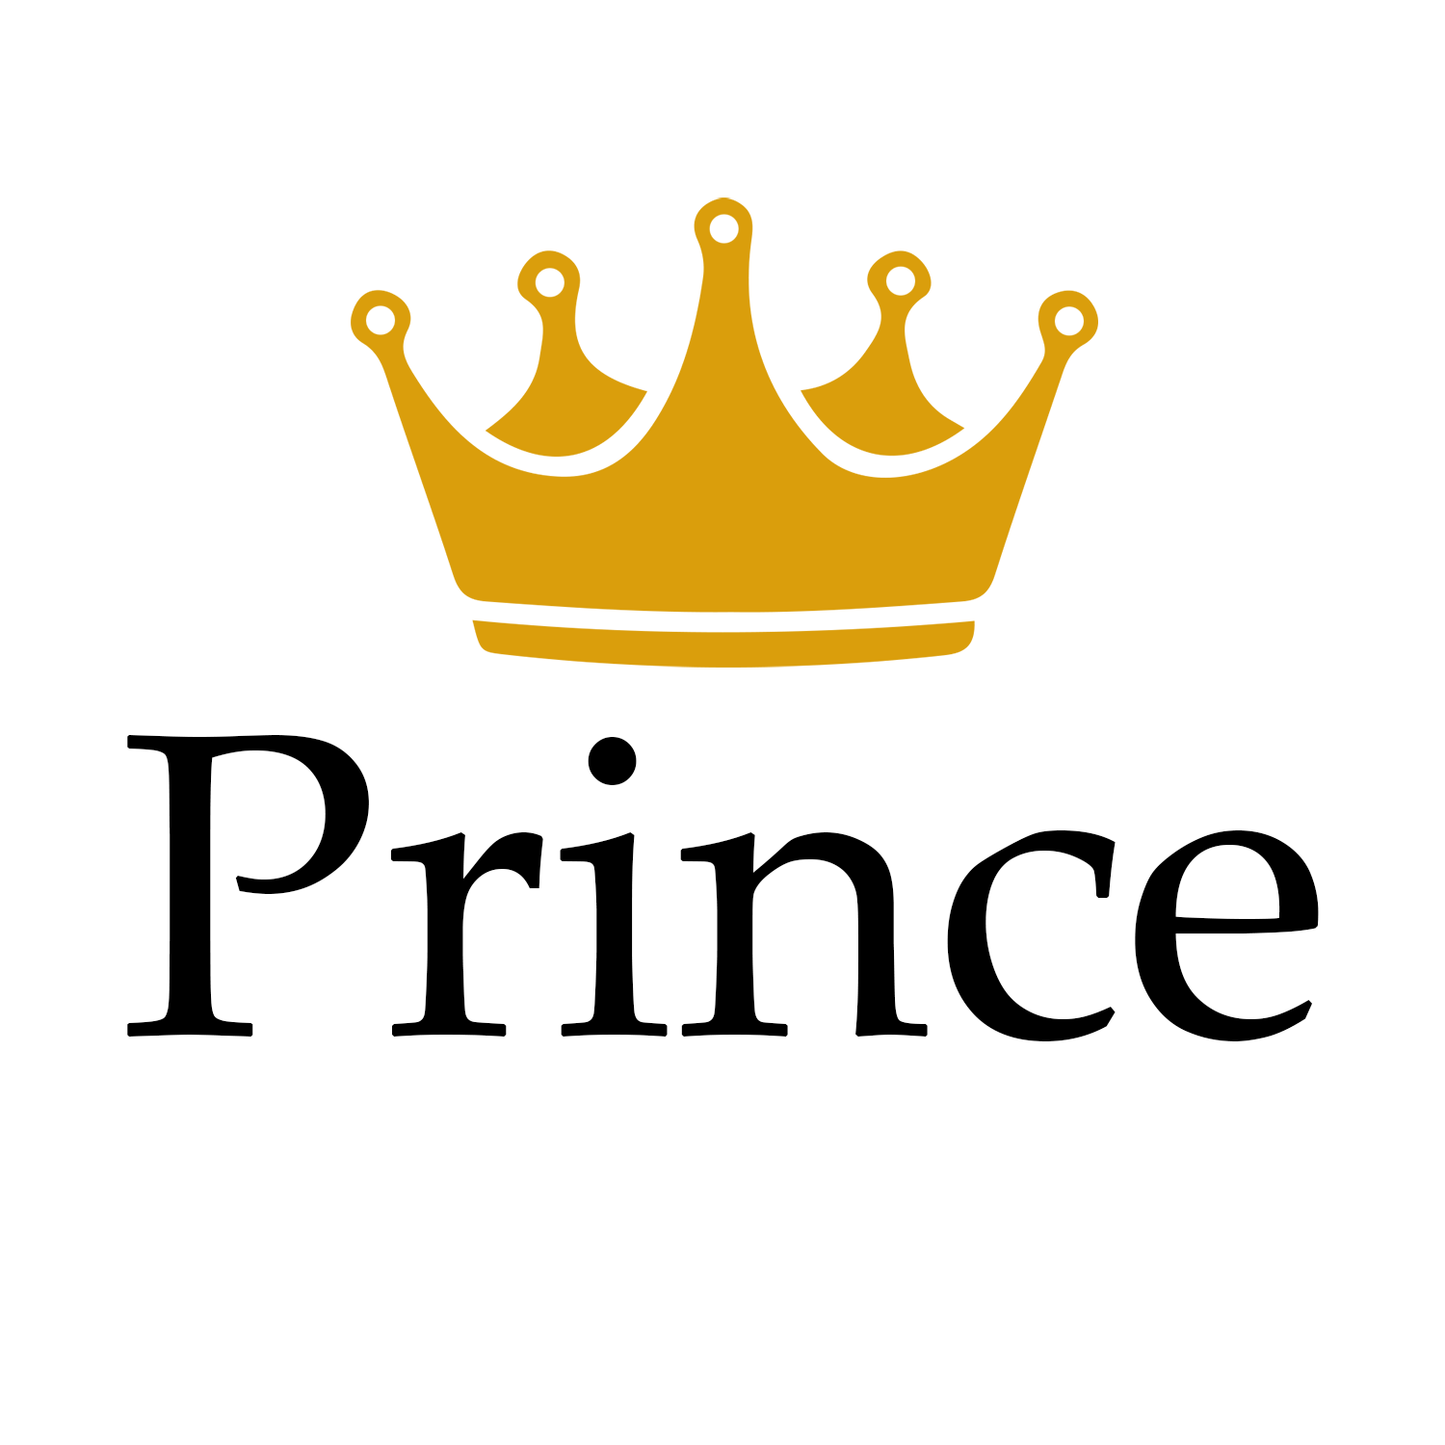 [Personalized] Prince Boy Organic Long Sleeves Baby Bodysuit